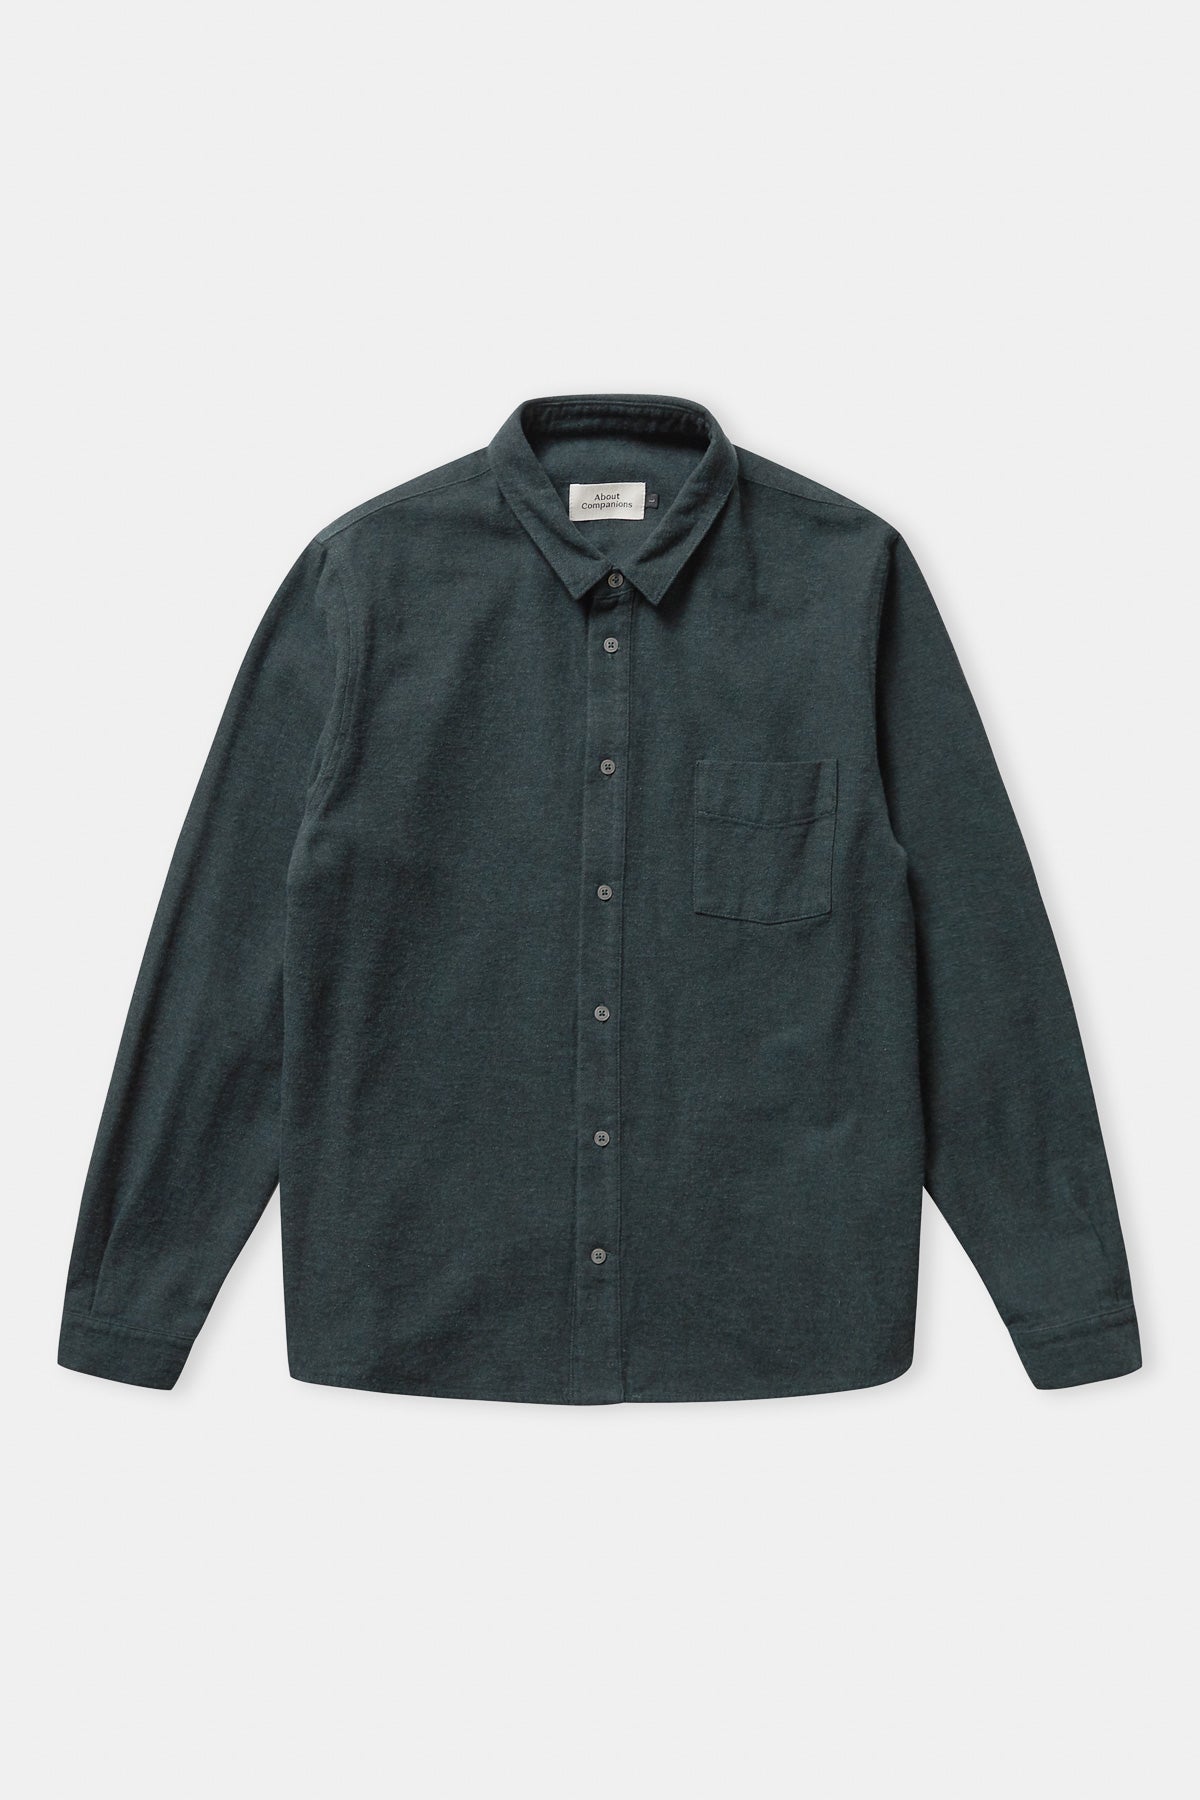 SIMON shirt eco scot green flannel